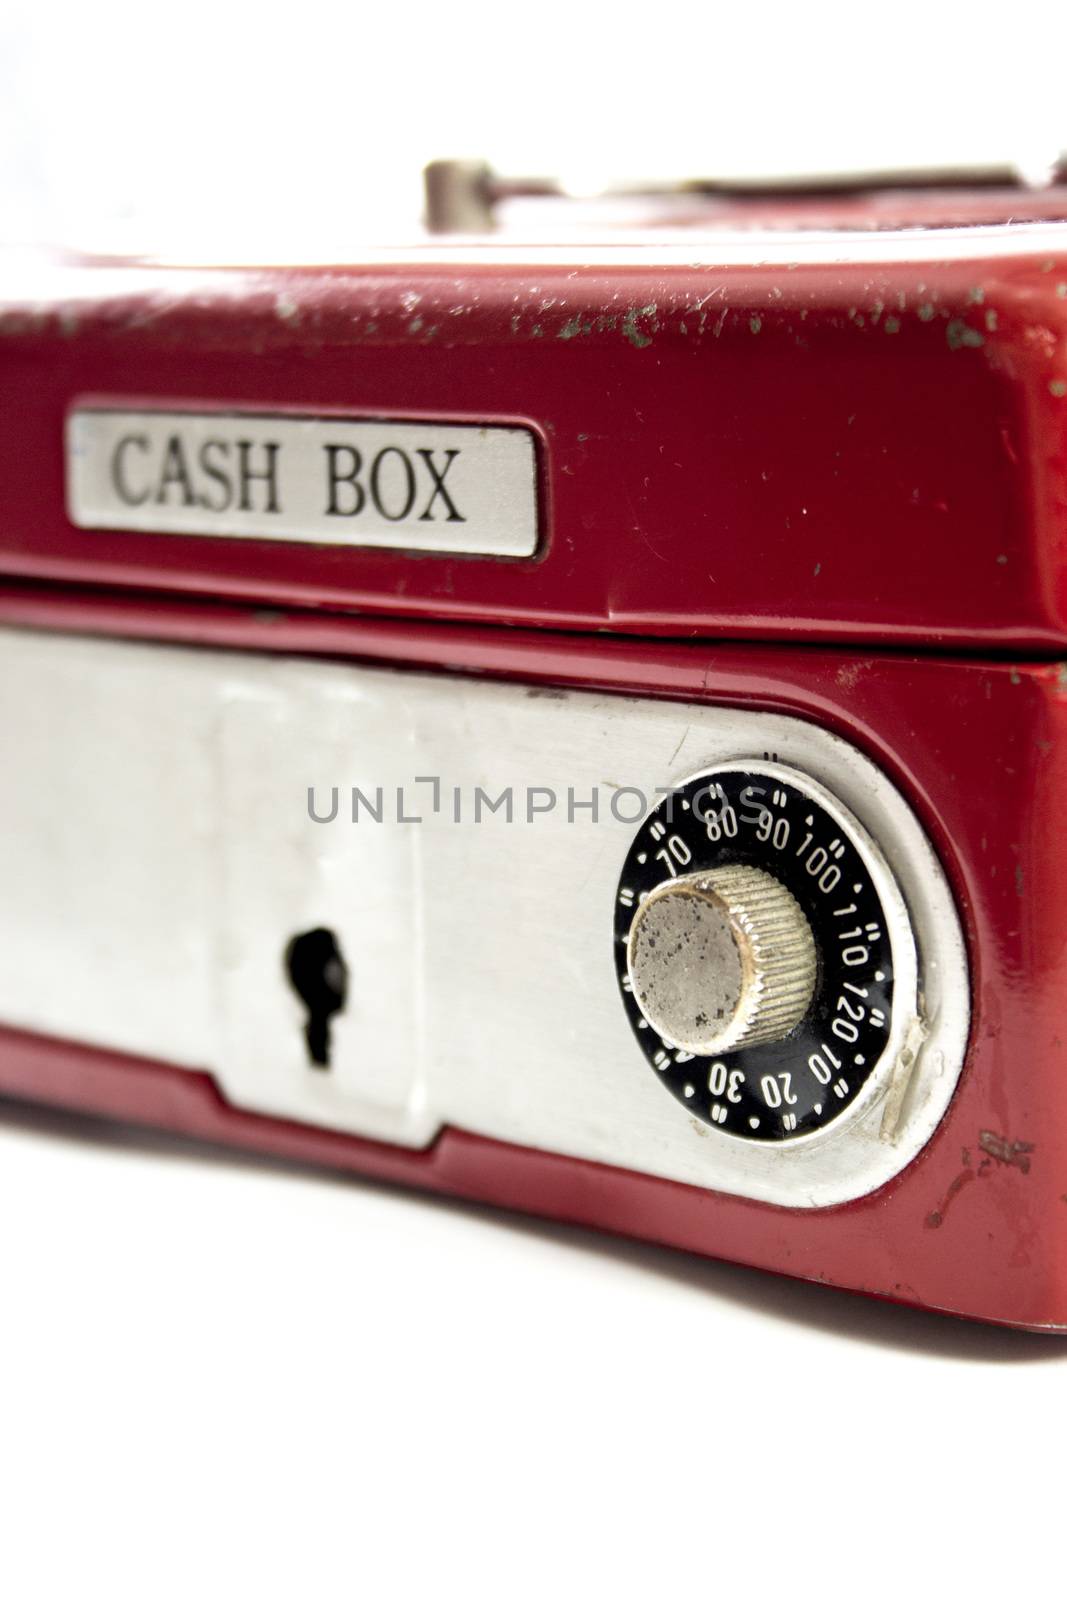 Red cash box by designsstock